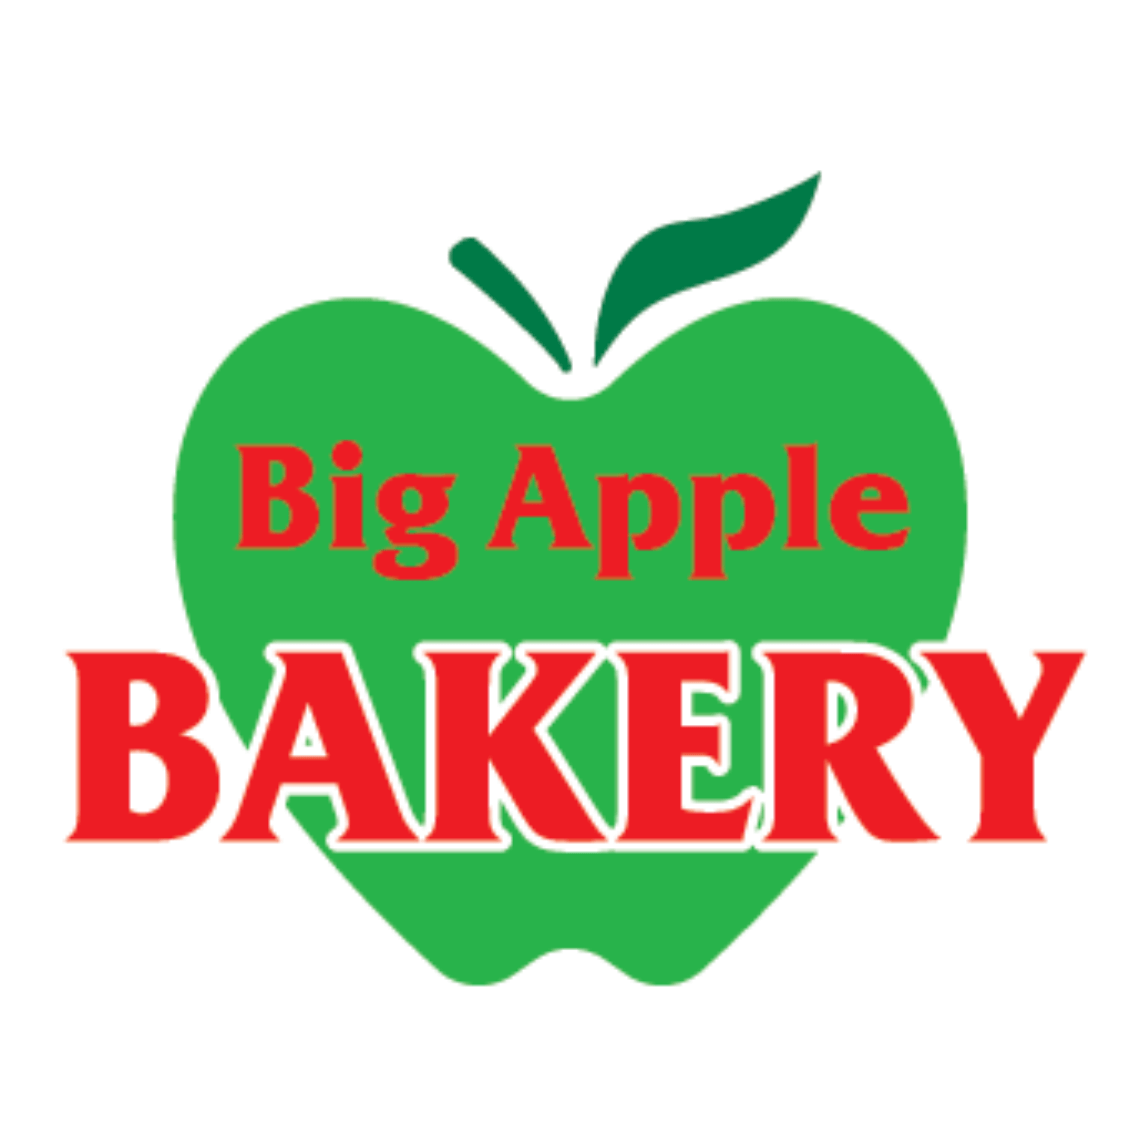 Shop Local big apple bakery